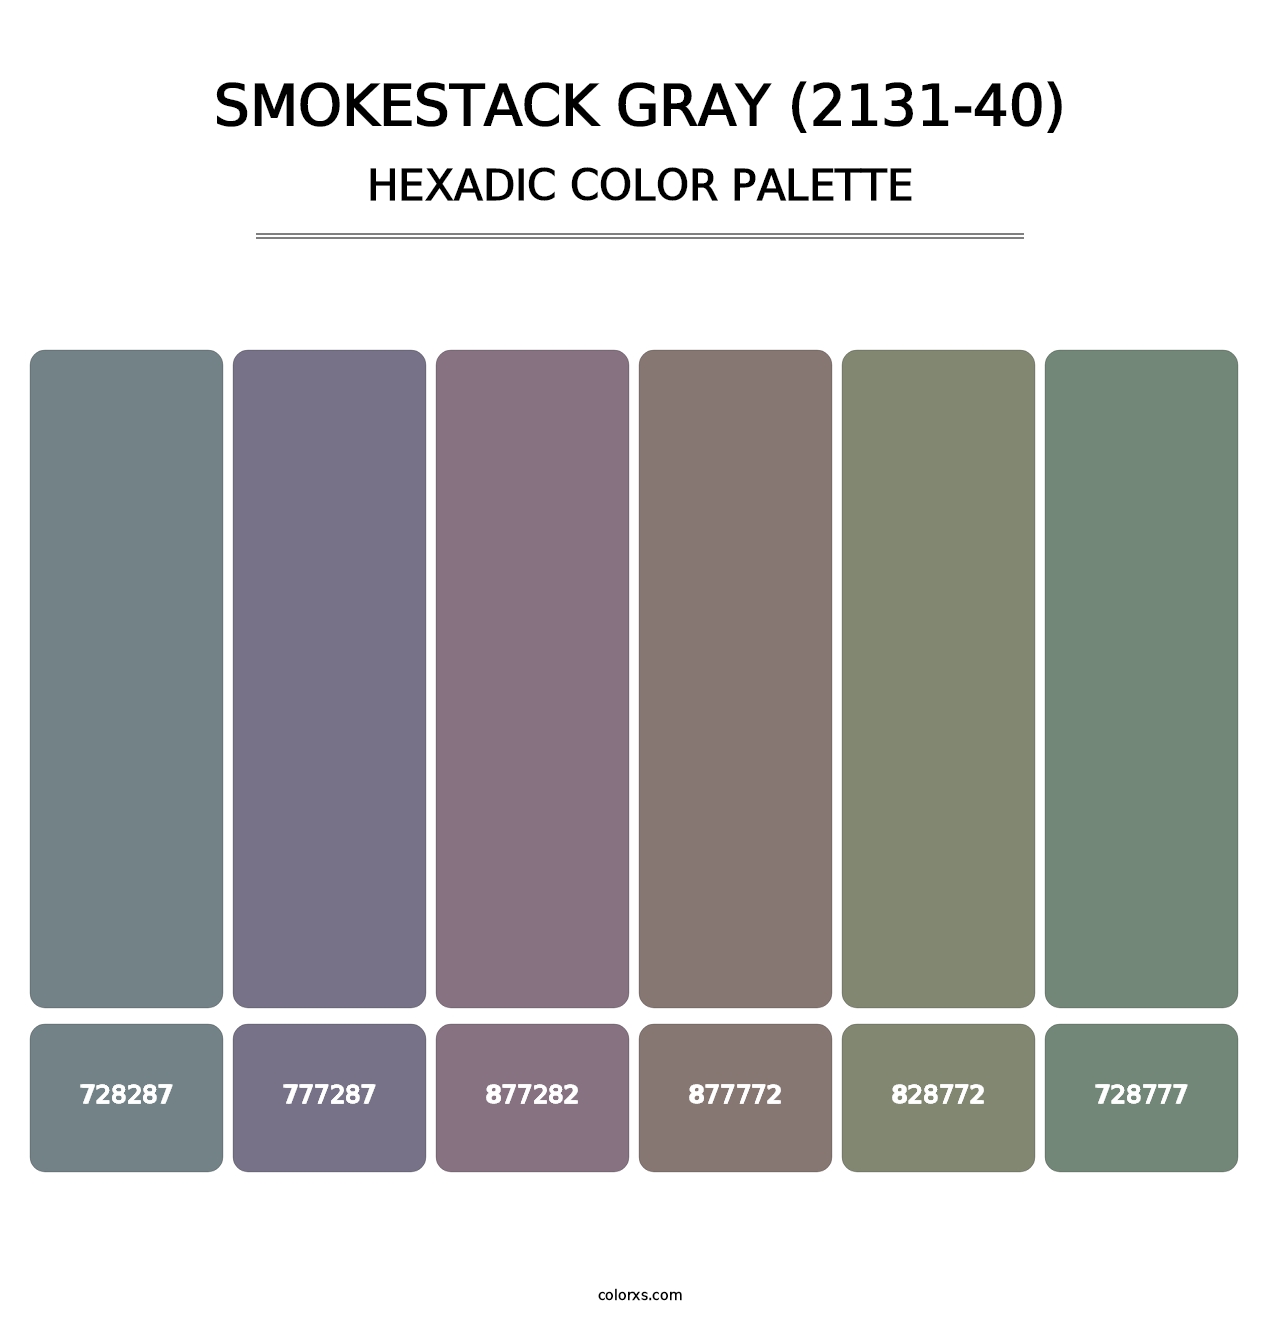 Smokestack Gray (2131-40) - Hexadic Color Palette